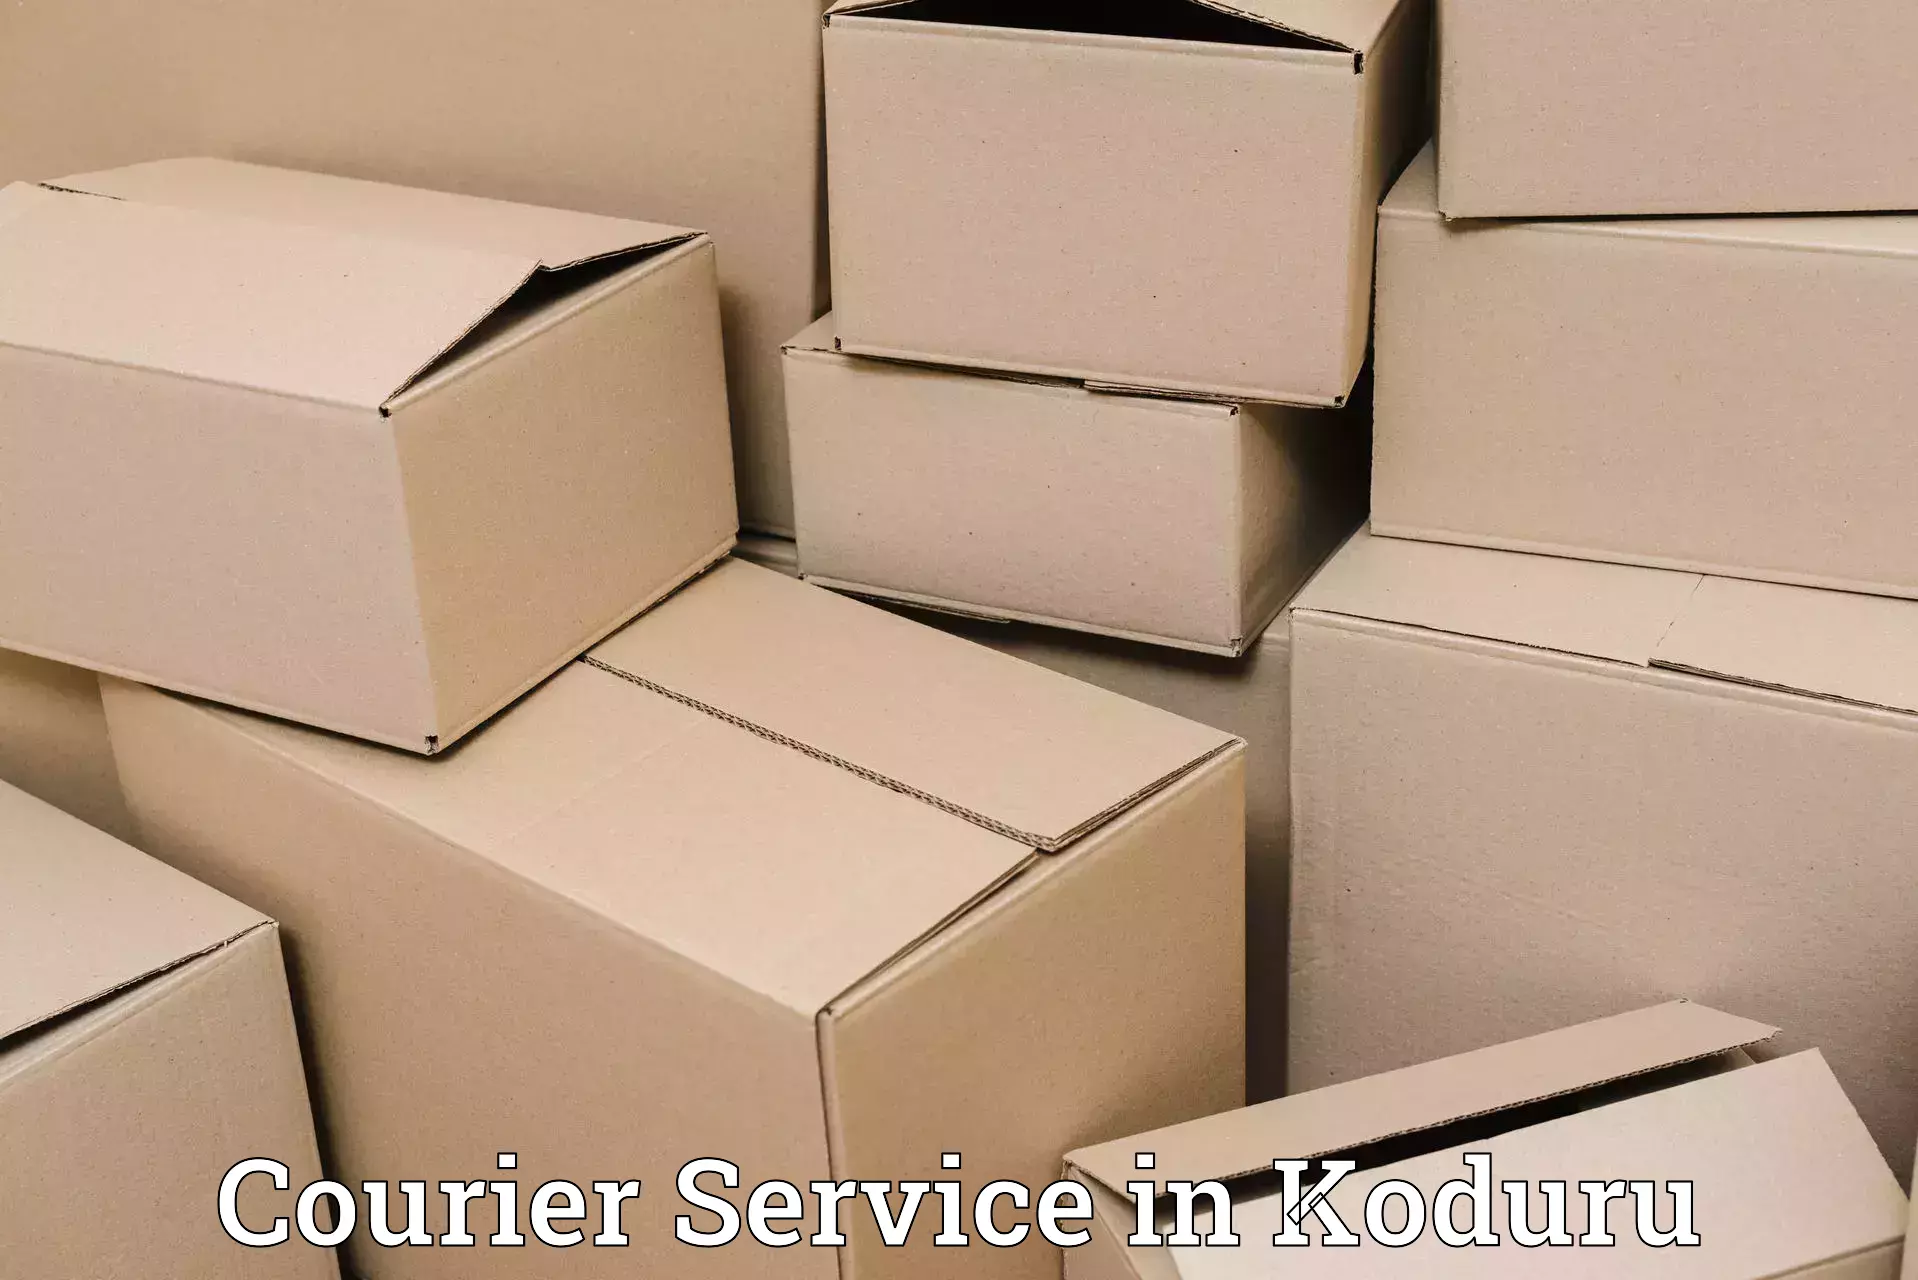 Global shipping networks in Koduru